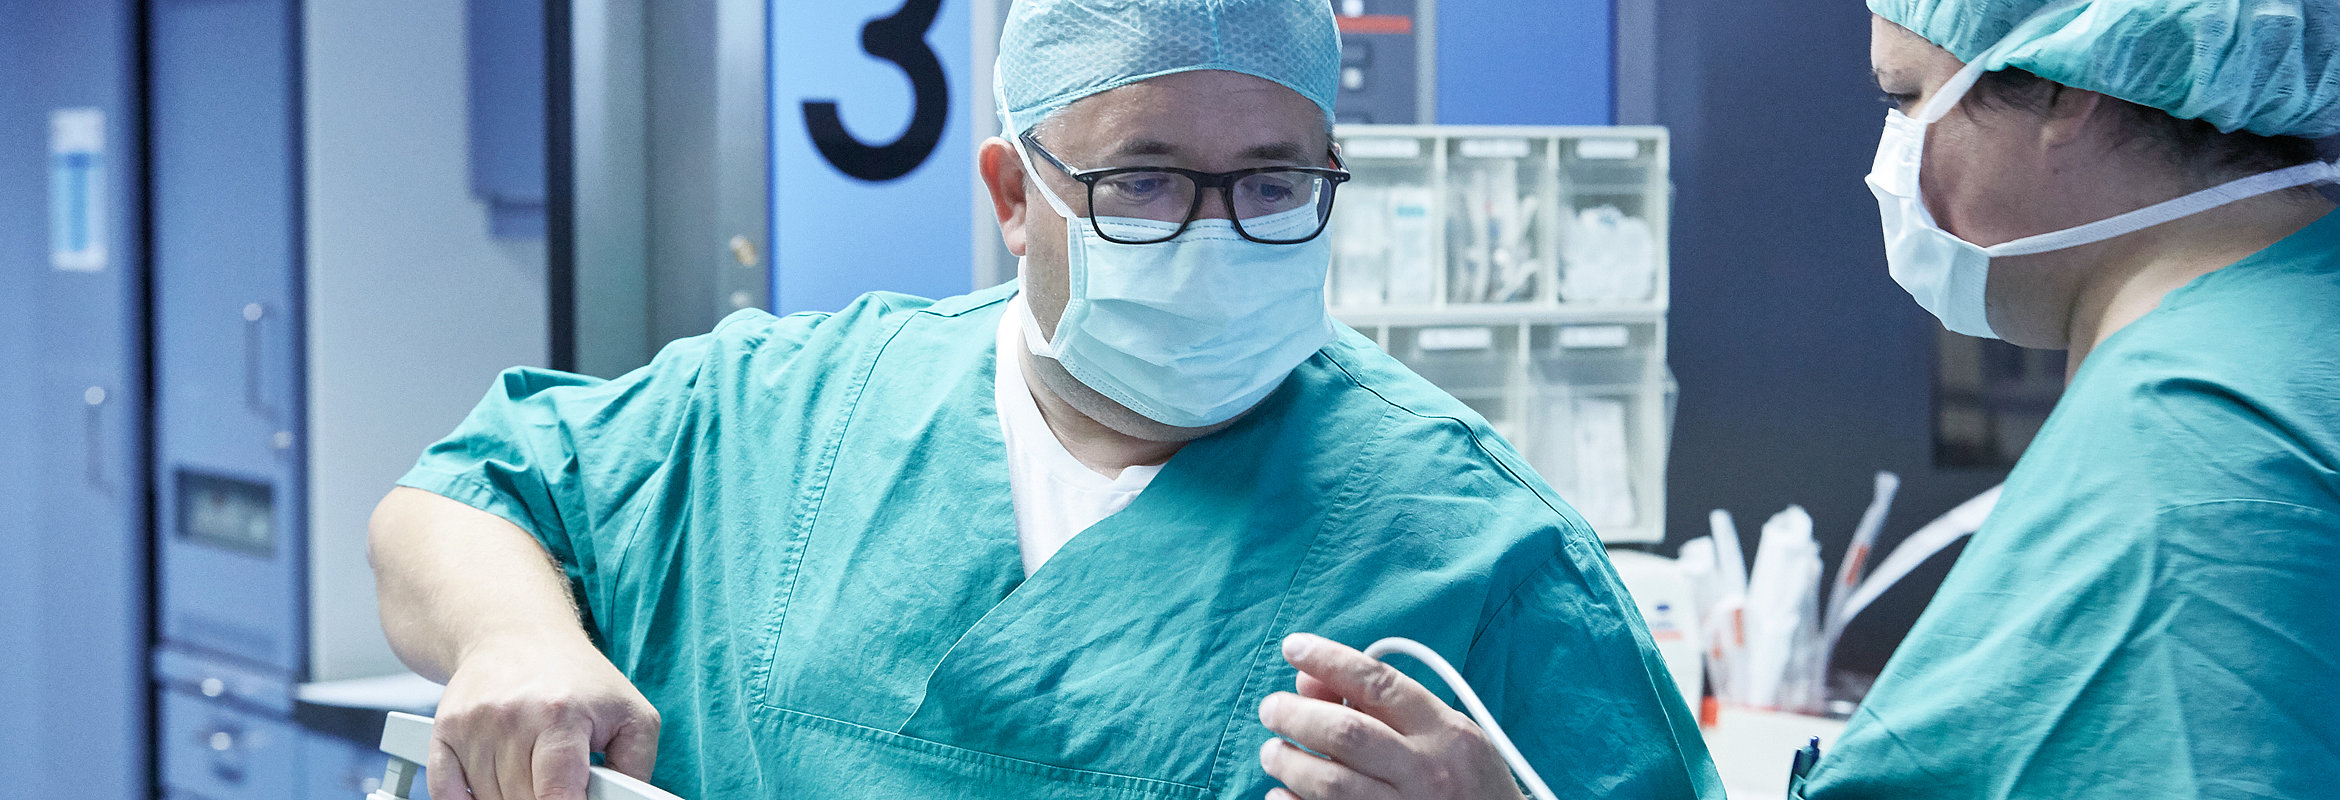 Chefarzt Prof. Dr. med. Stefan Hofer im Operationssaal